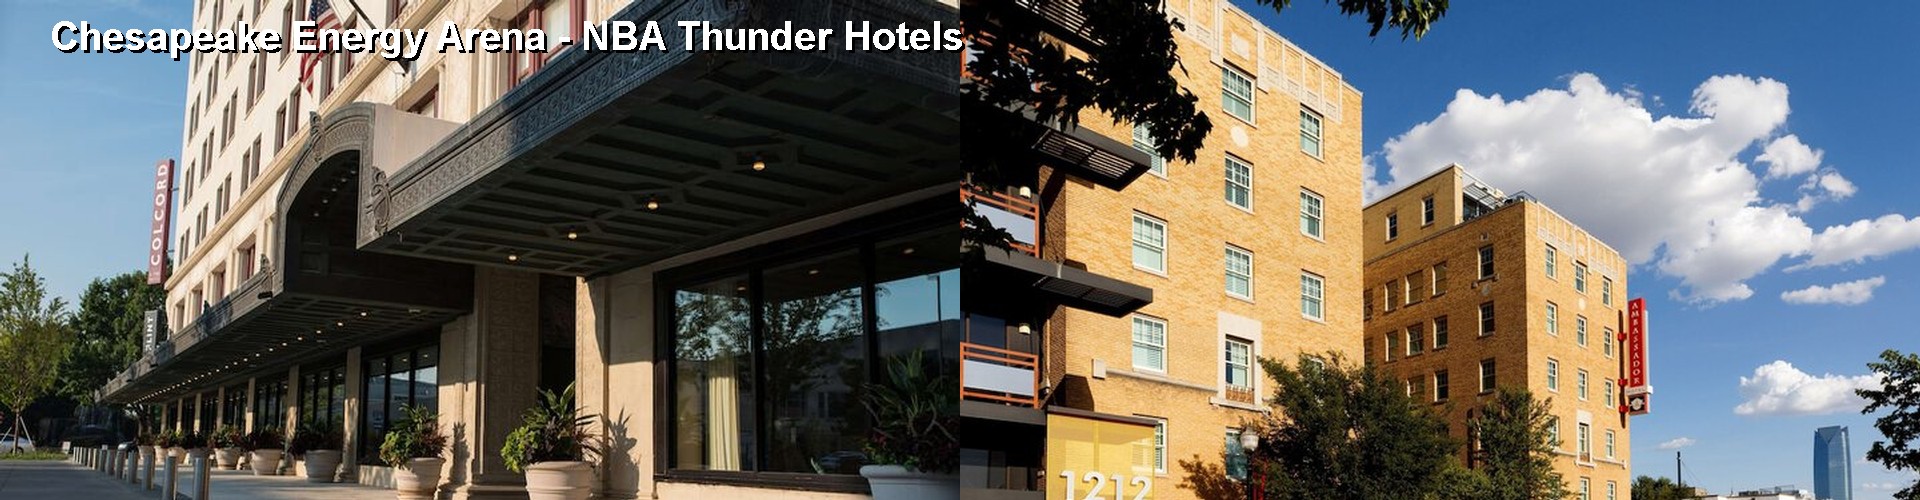 5 Best Hotels near Chesapeake Energy Arena - NBA Thunder